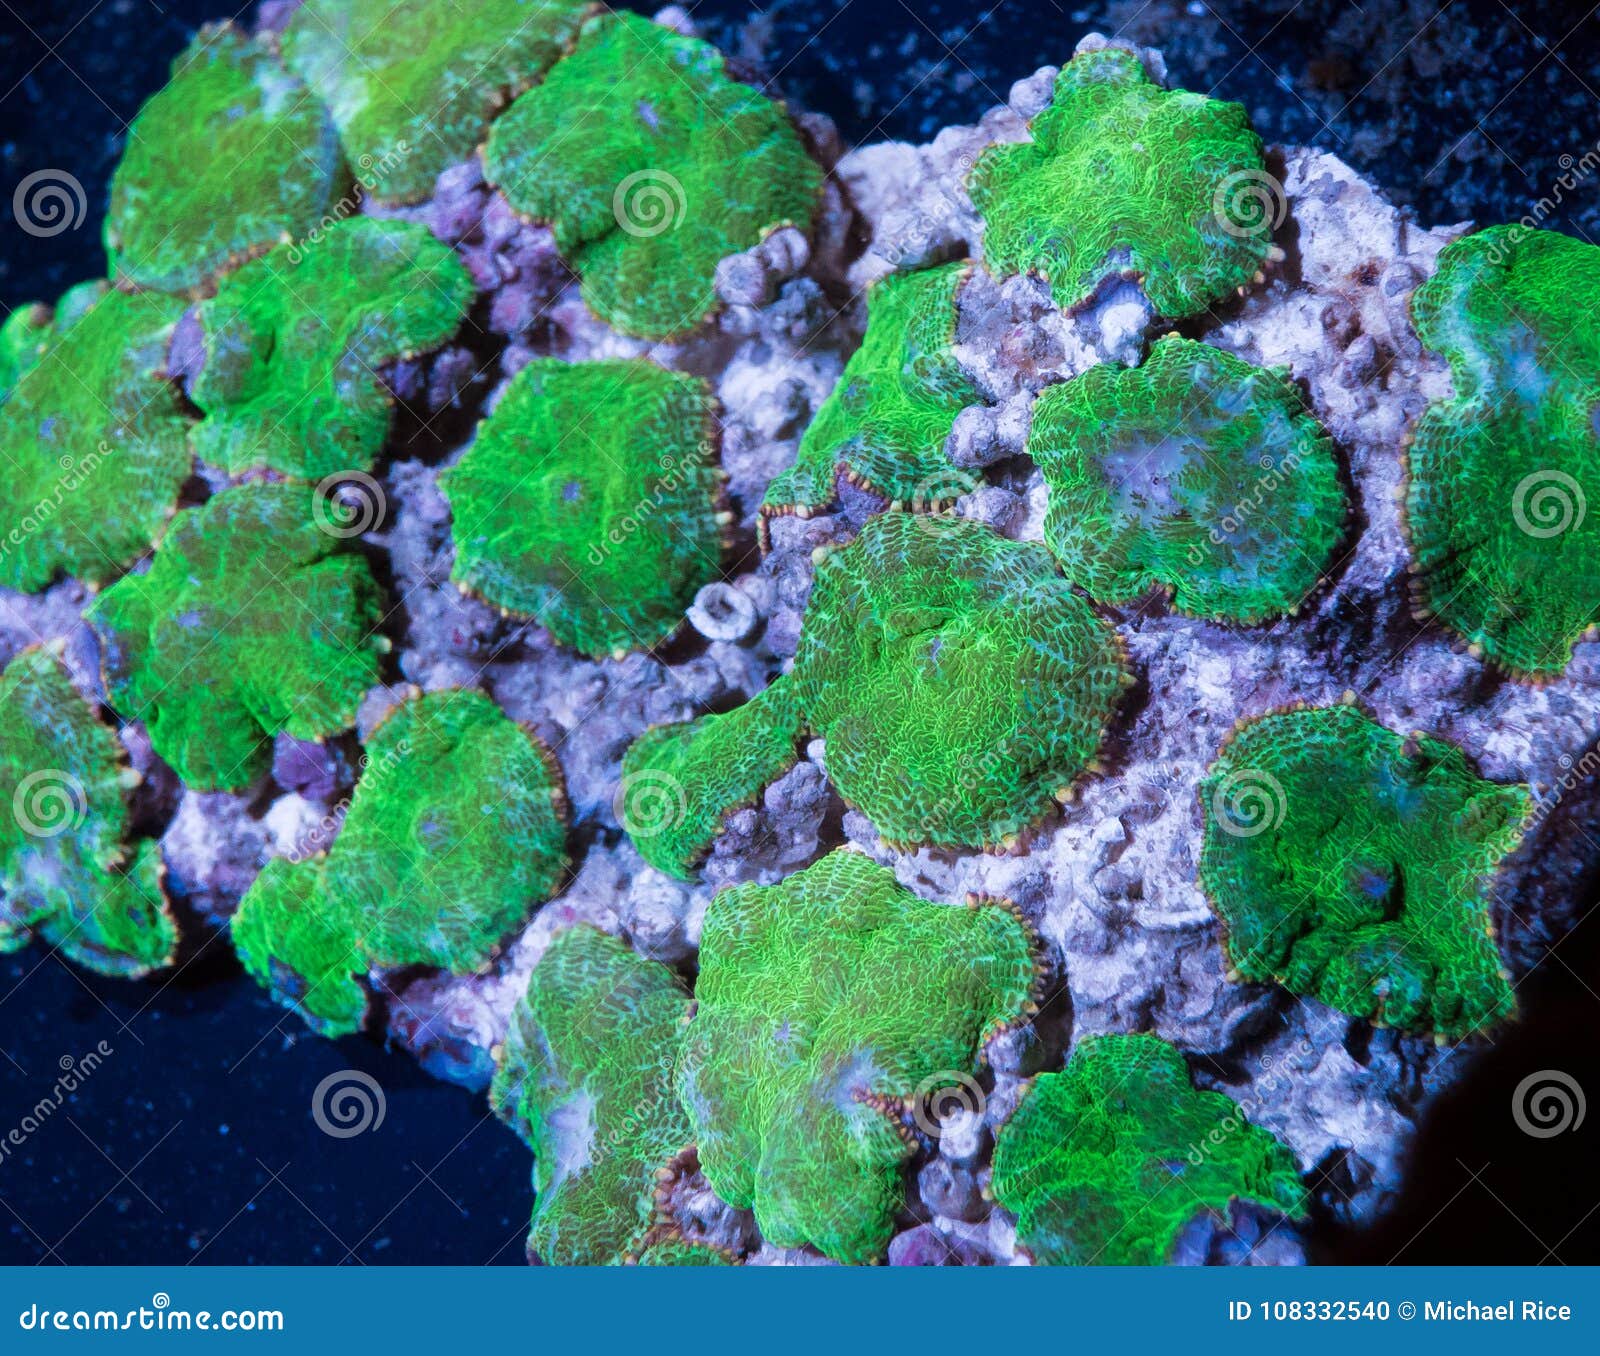 Green mushroom corals stock photo. Image of maritime - 108332540